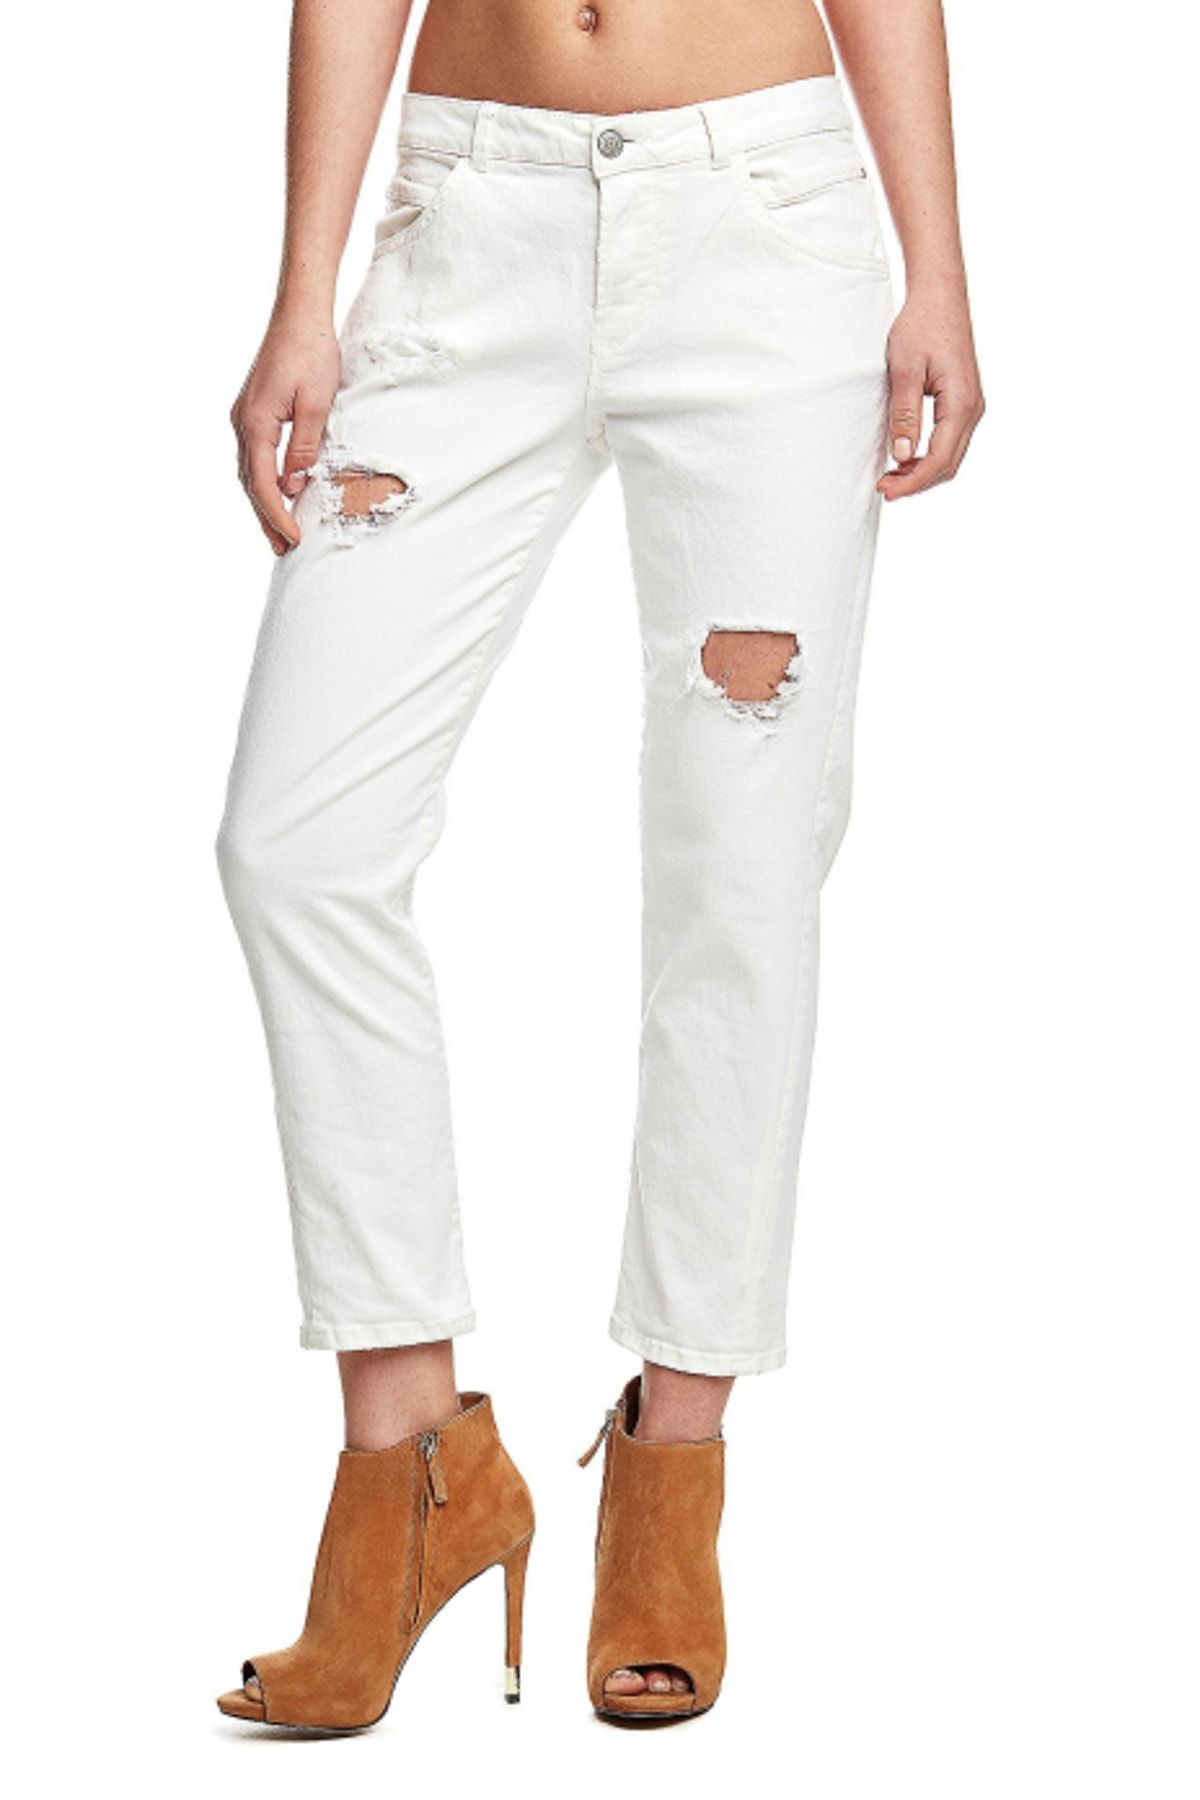 Guess Kadın Beyaz Jeans GU61W61086D21Y0